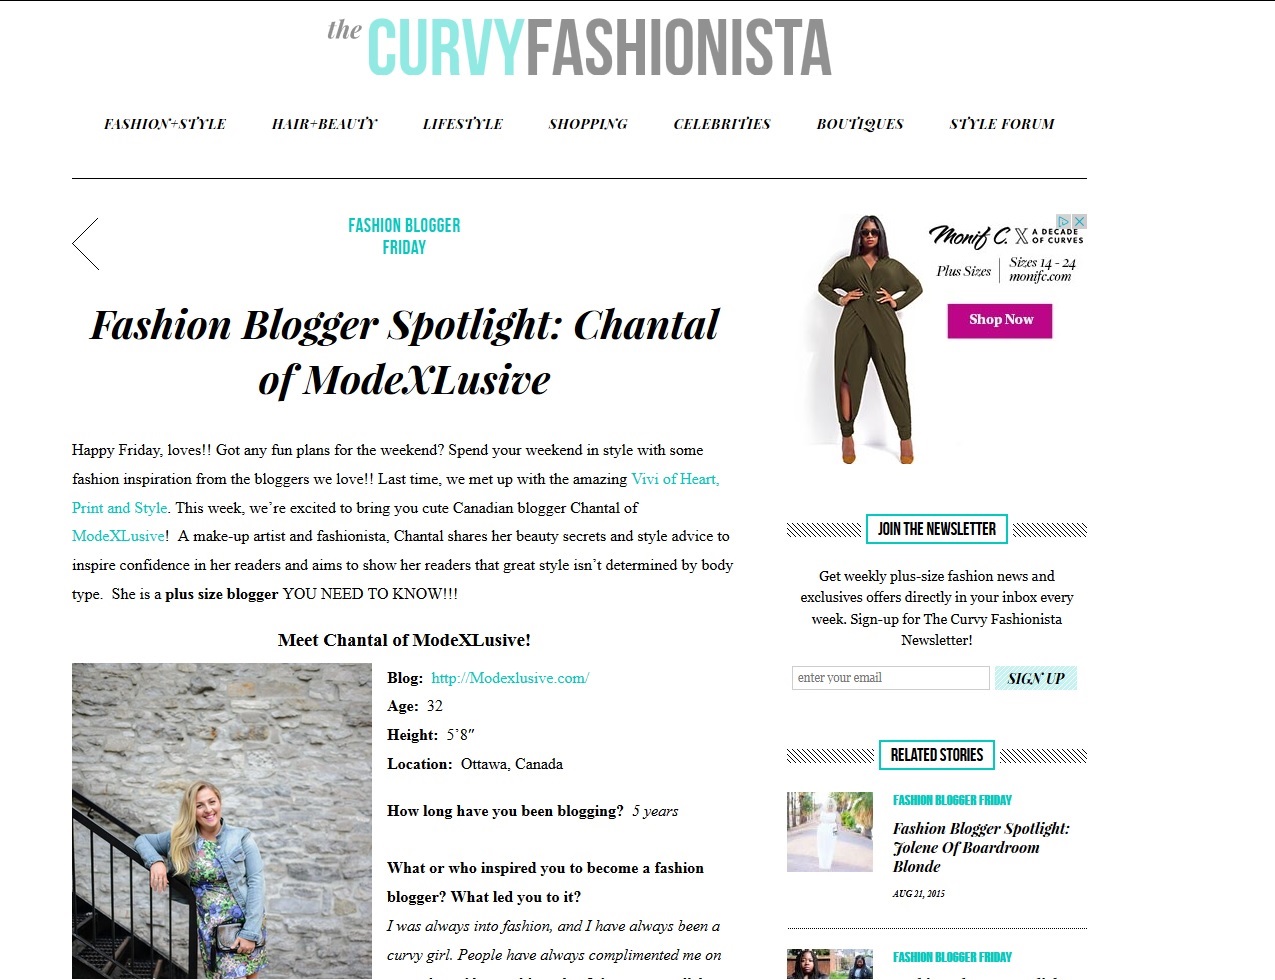 The Curvy Fashionista's Fashion Blogger Spotlight: Chantal of ModeXLusive